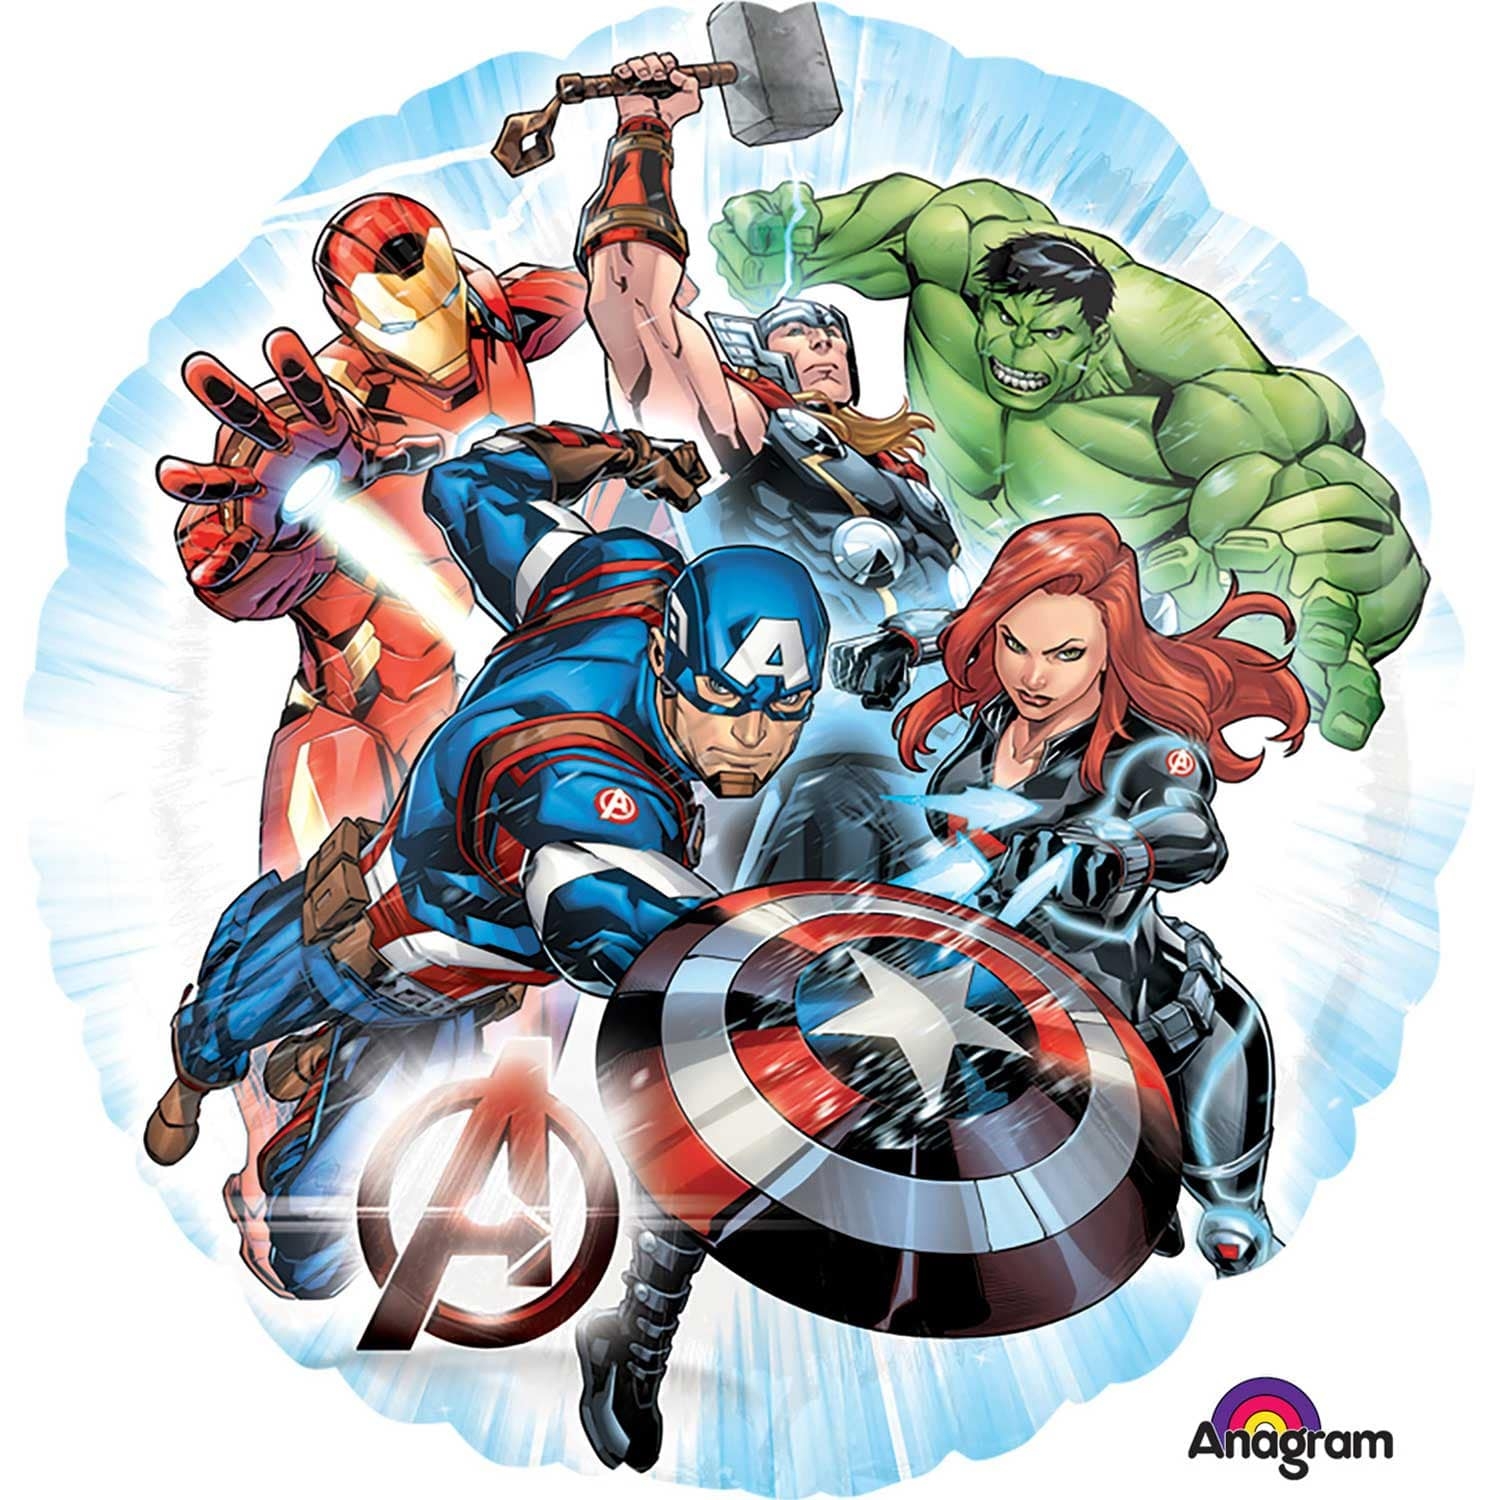 Marvel Avengers Party